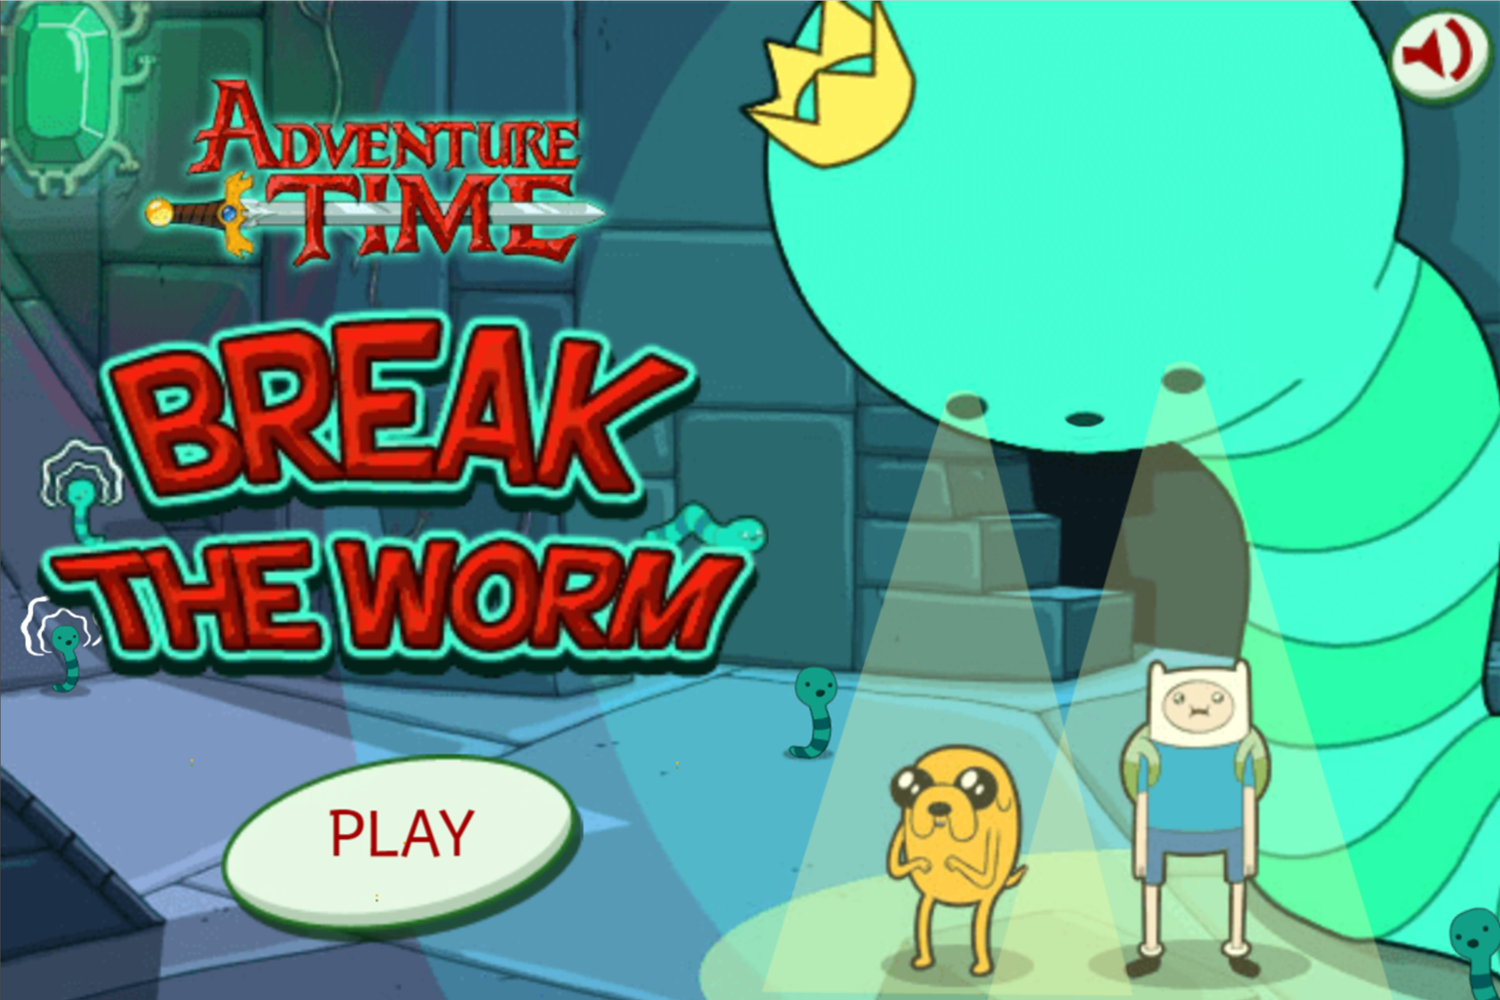 Adventure Time Break the Worm Welcome Screen Screenshot.